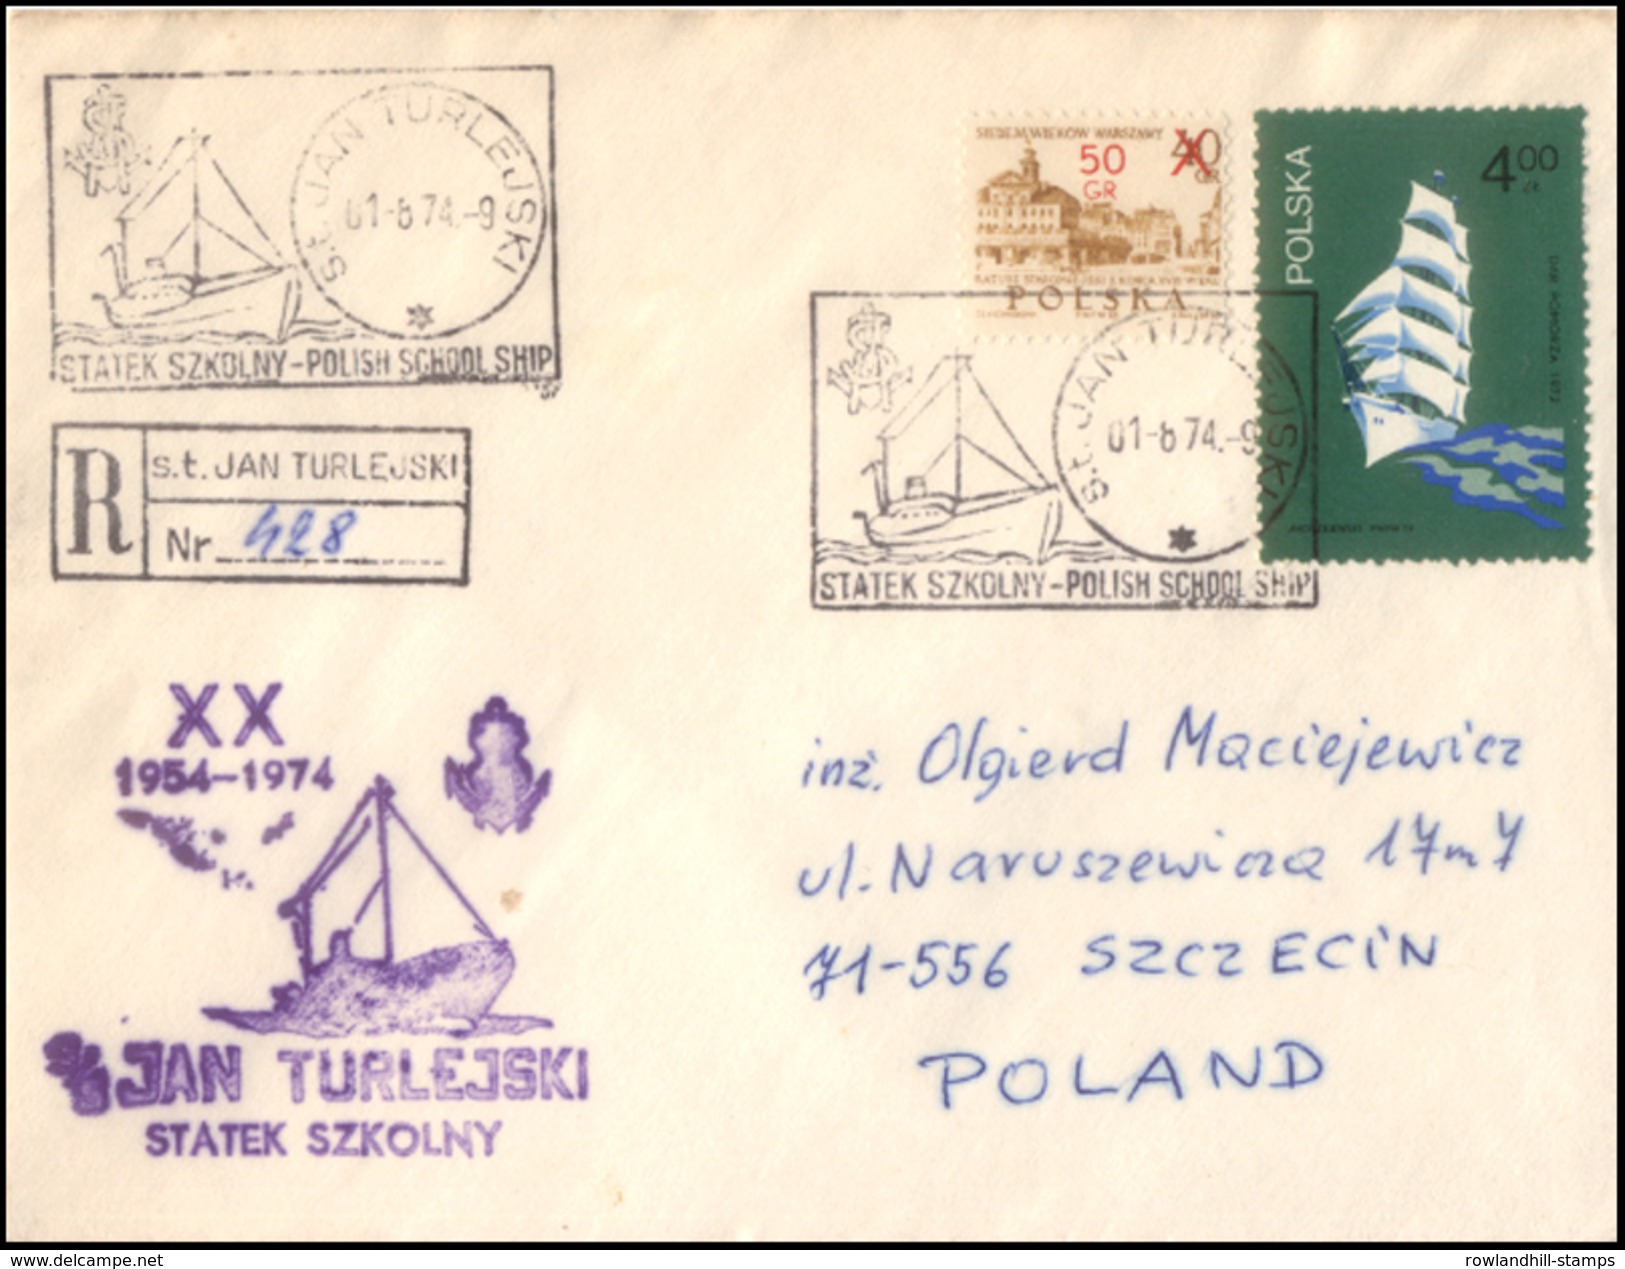 Poland, Polska, 1974, Jan Turlejski Statek Szkolny, Polish School Ship, Sailing Ships, Transport, Ship, Expeditions. - Arktis Expeditionen